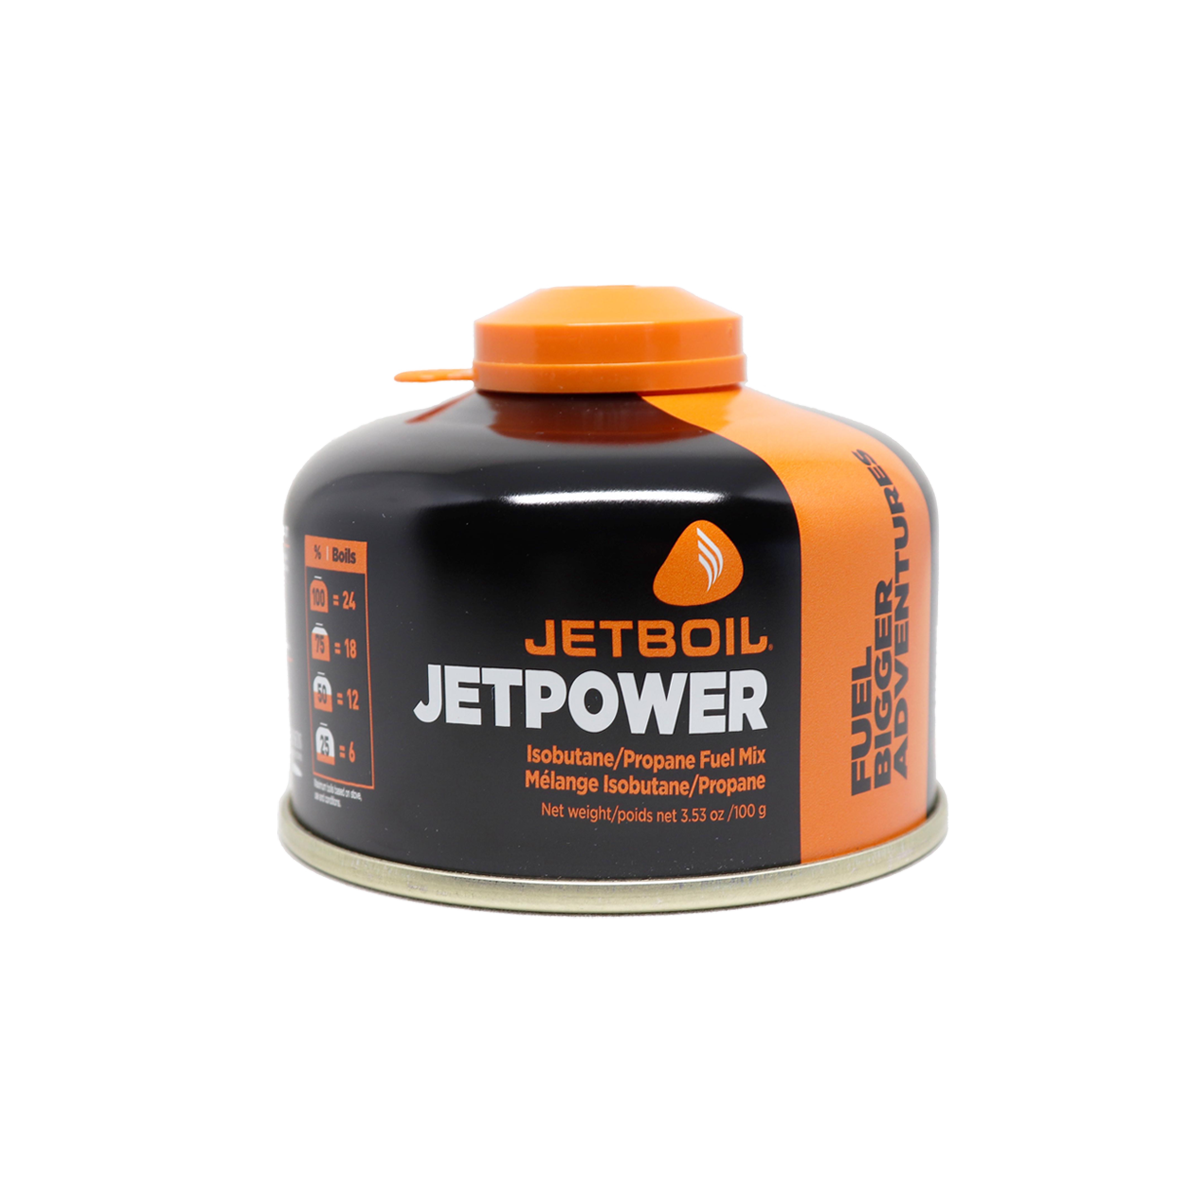 Jetboil Jetpower Fuel - Kartusche